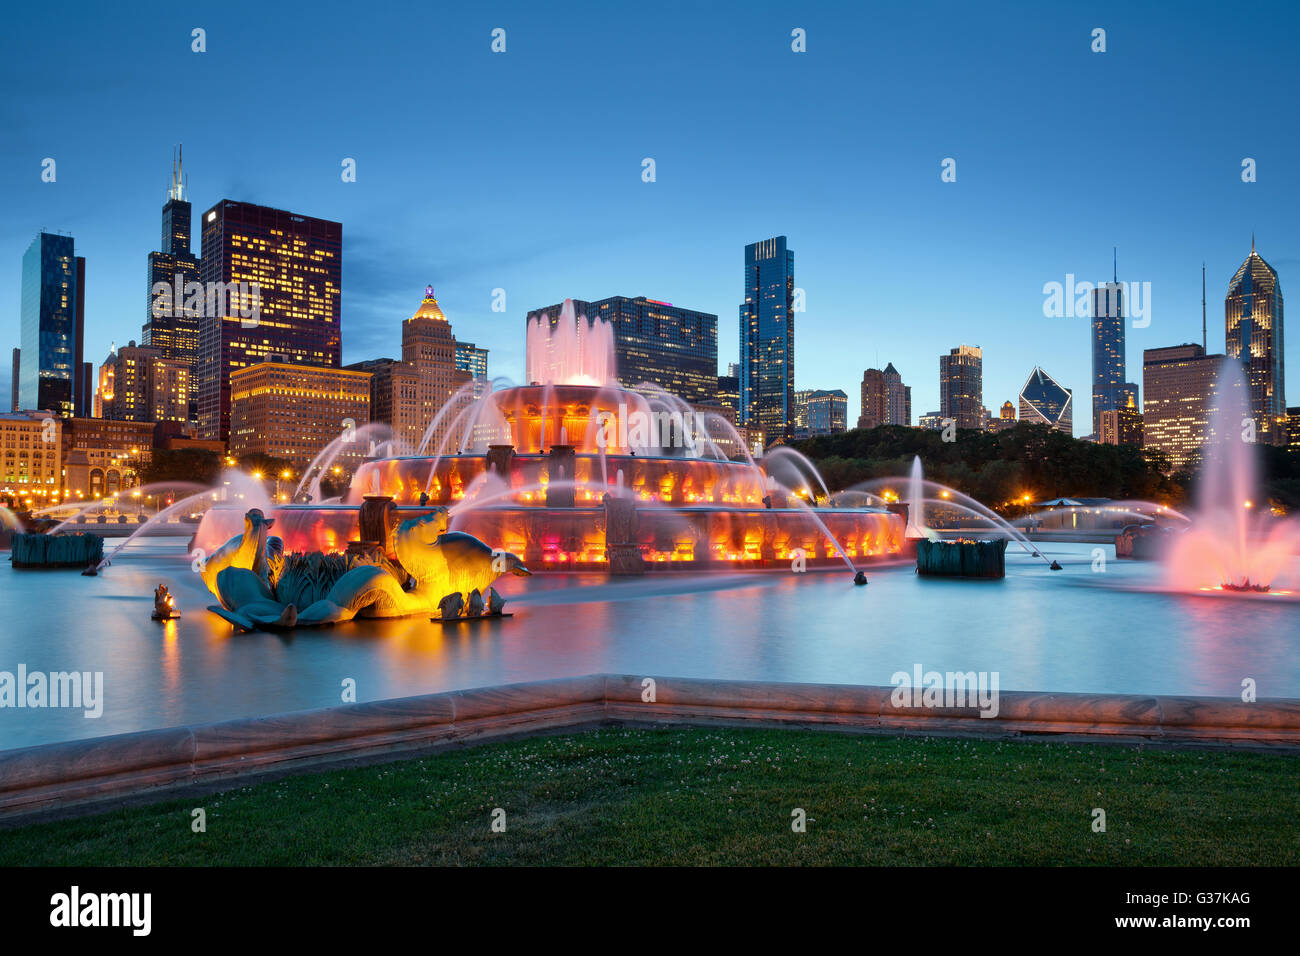 Buckingham Fountain. Image of Buckingham Fountain in Grant Park, Chicago, Illinois, USA. Stock Photo